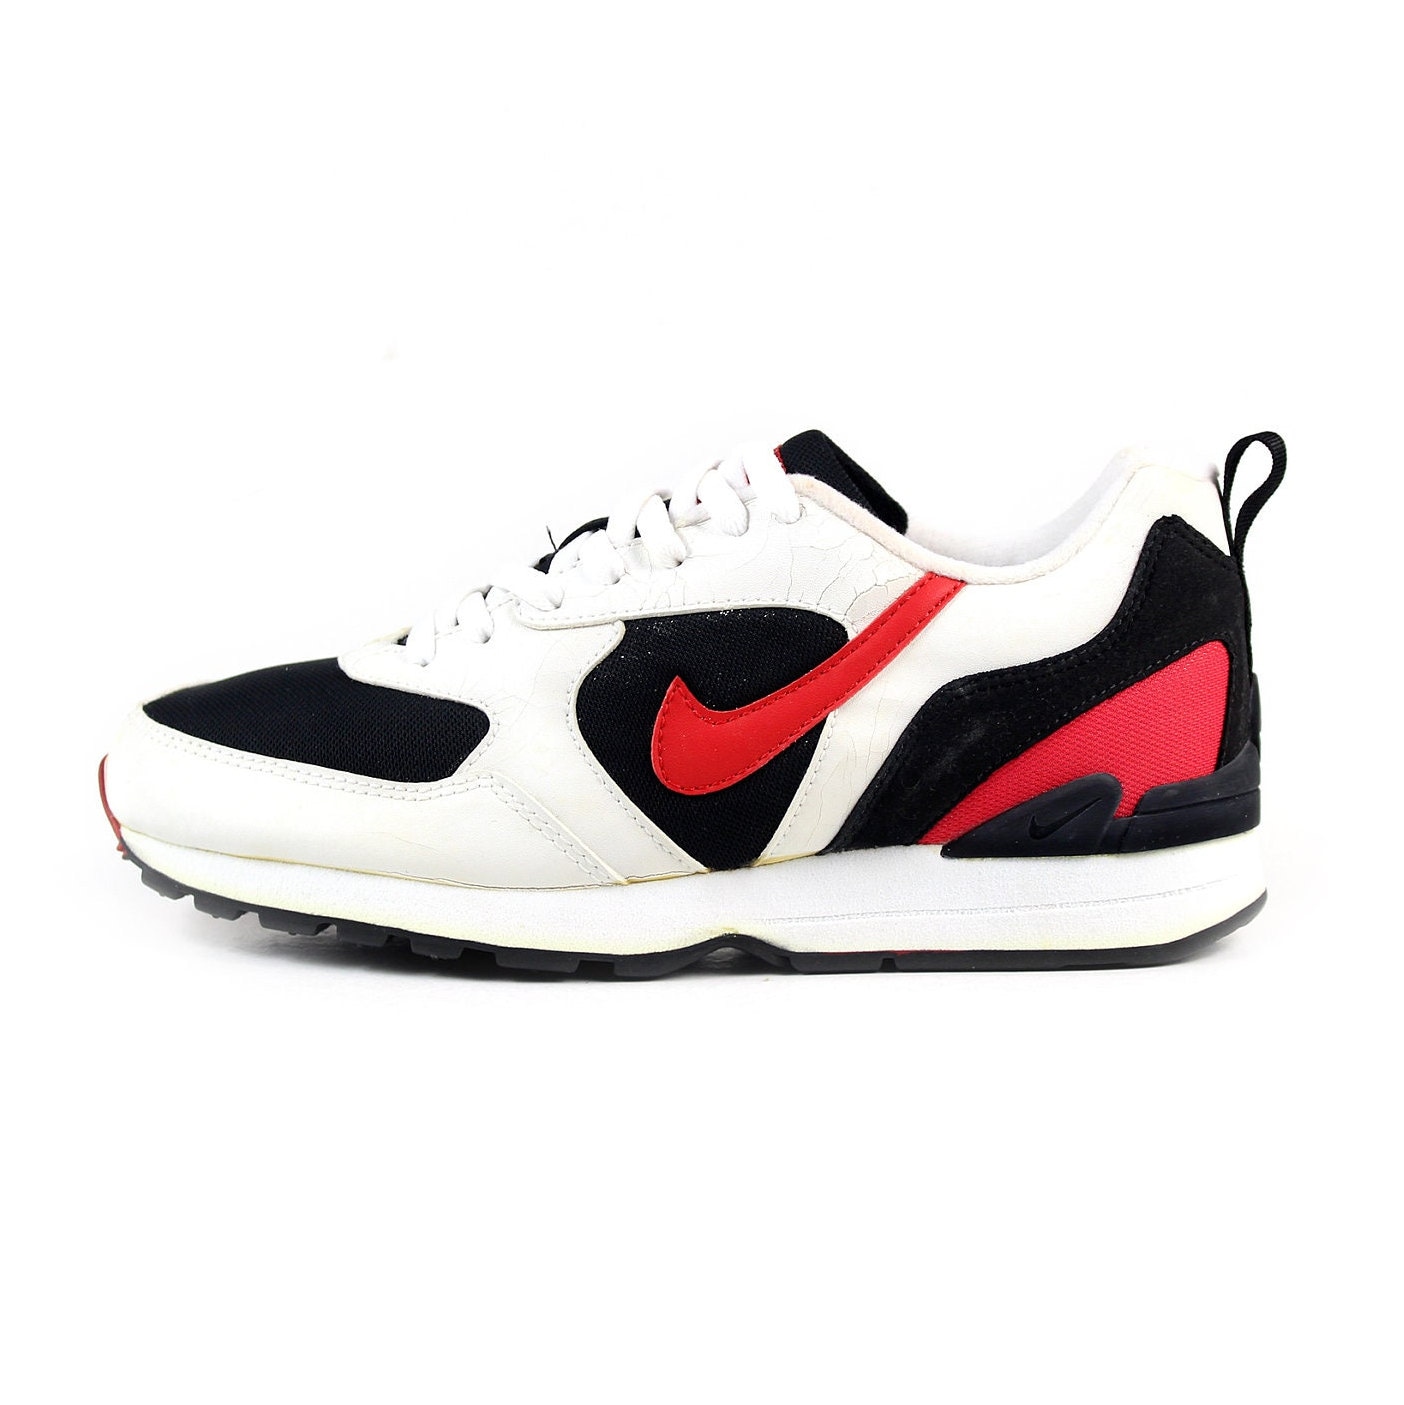 NOS 1995 90s Vintage Nike Runner Kicks - Etsy